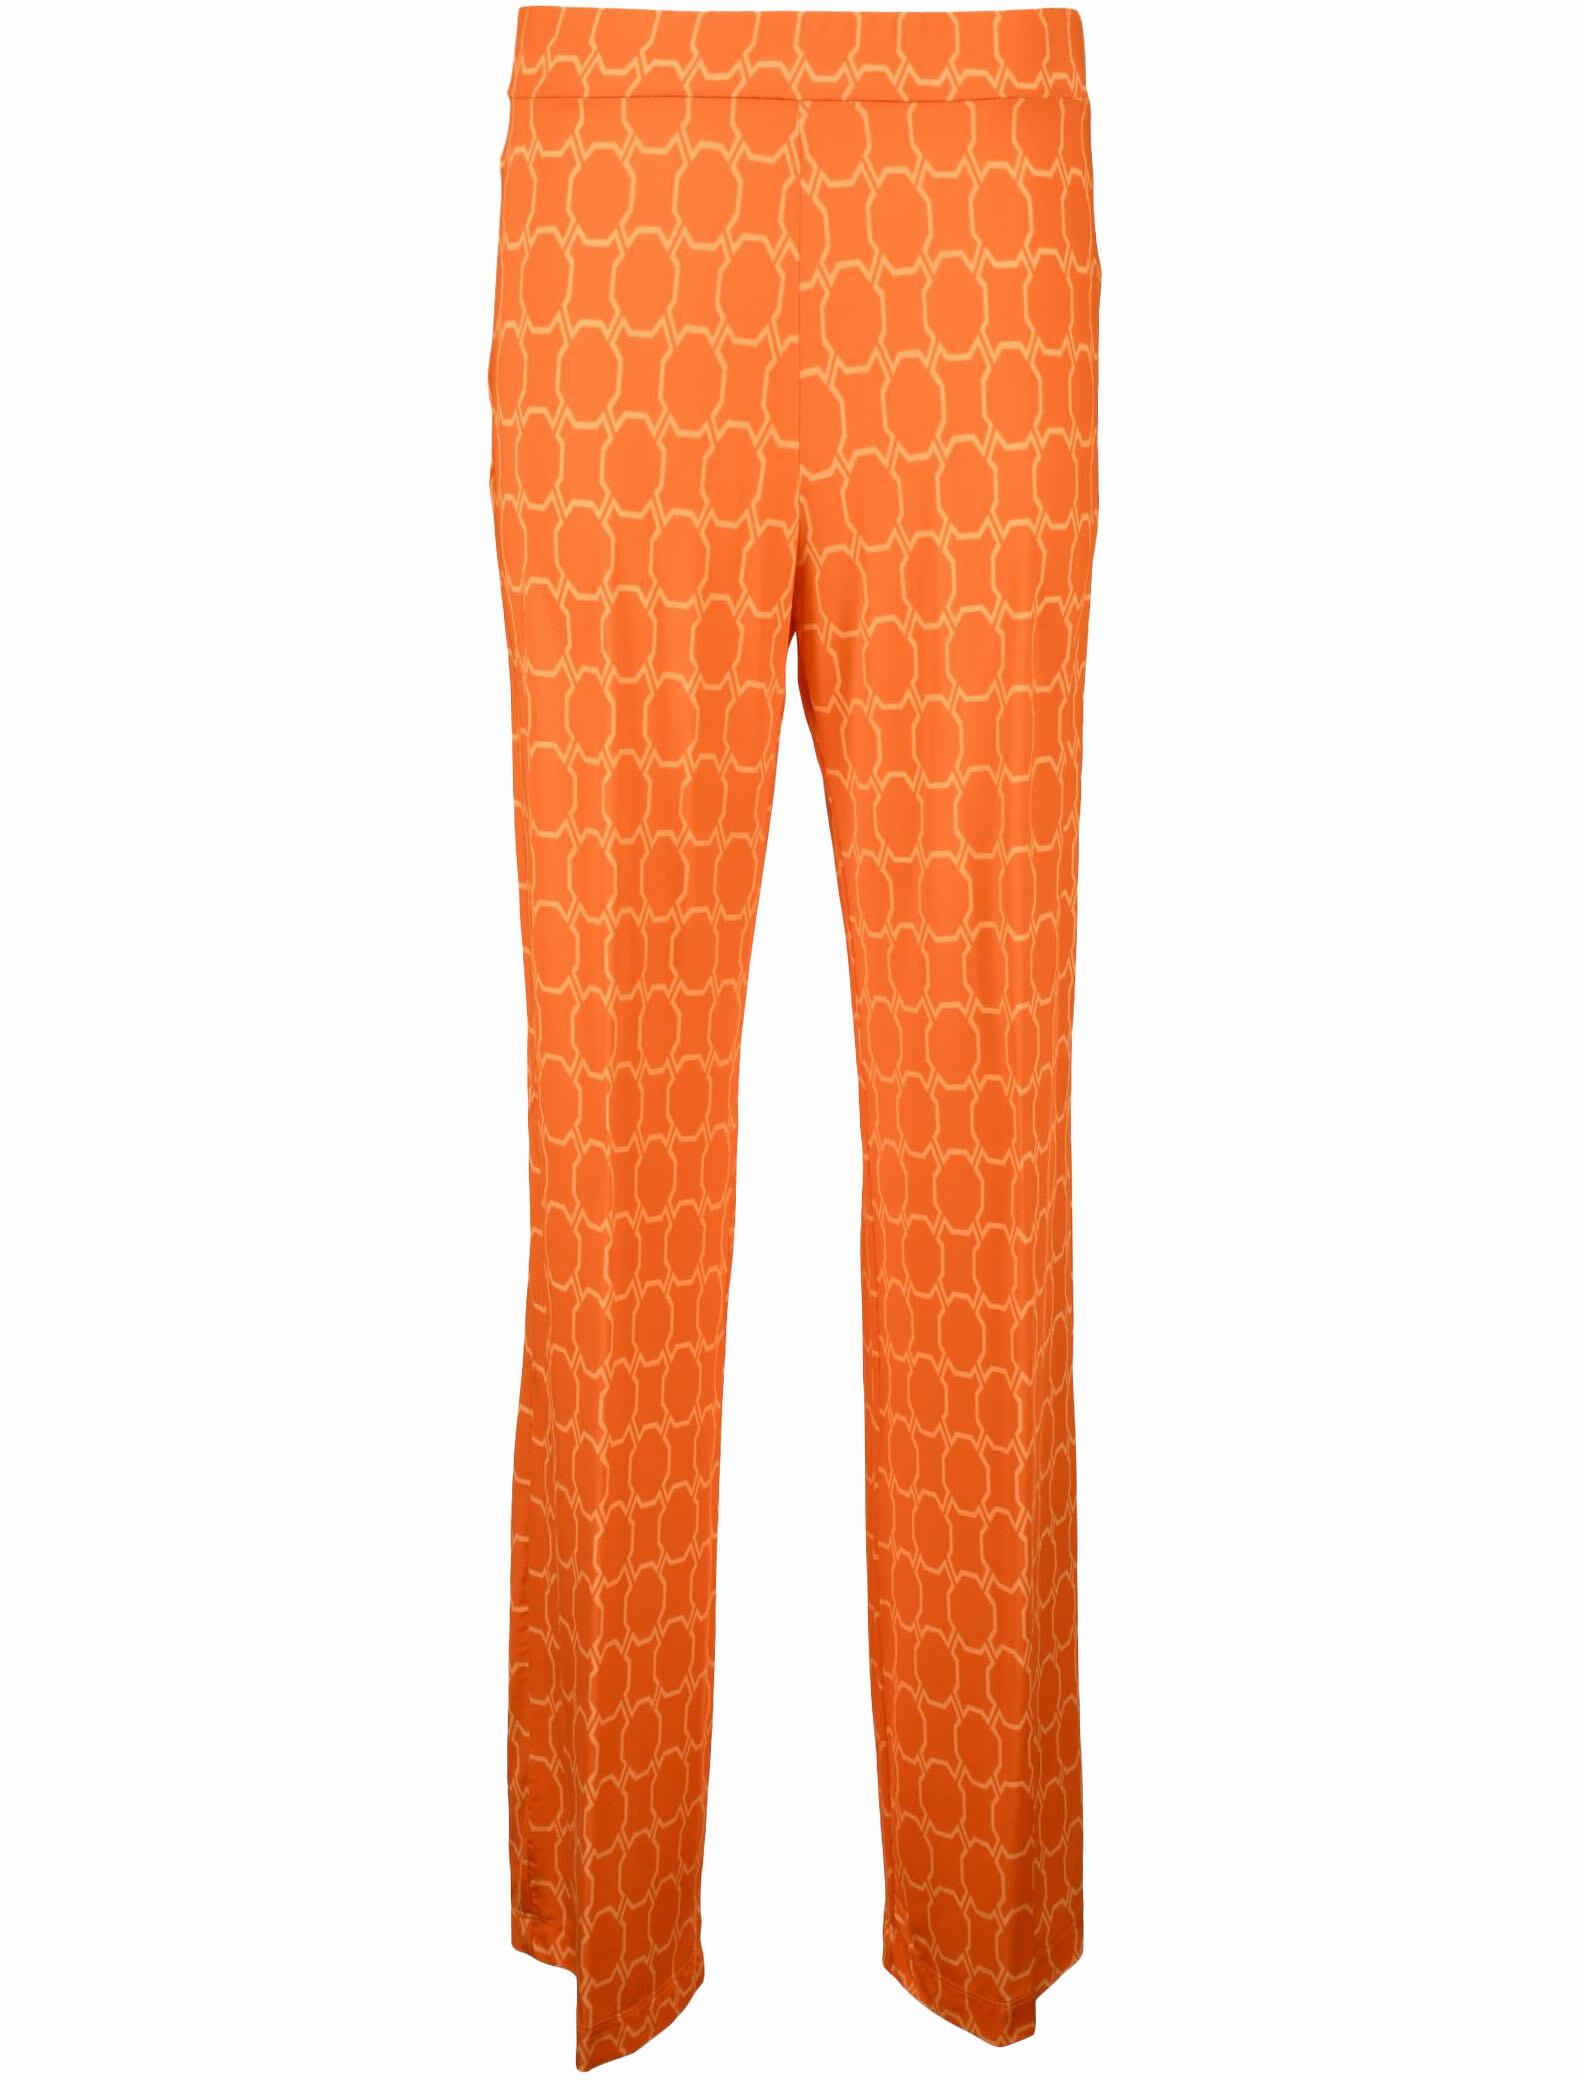 Caractēre Women's Orange Pants 40 IT at FORZIERI UK